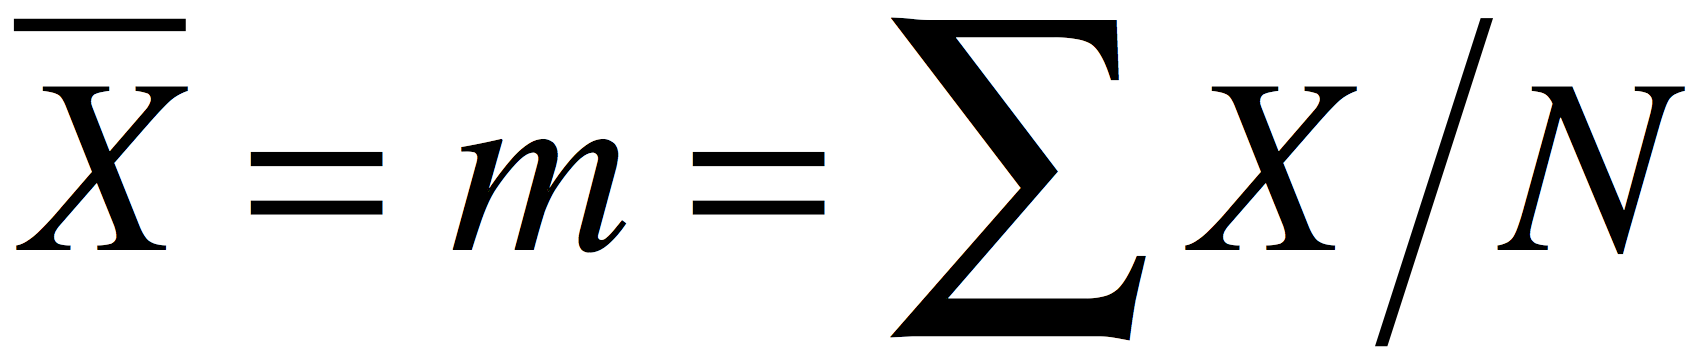 Greek Symbol For Sum - ClipArt Best